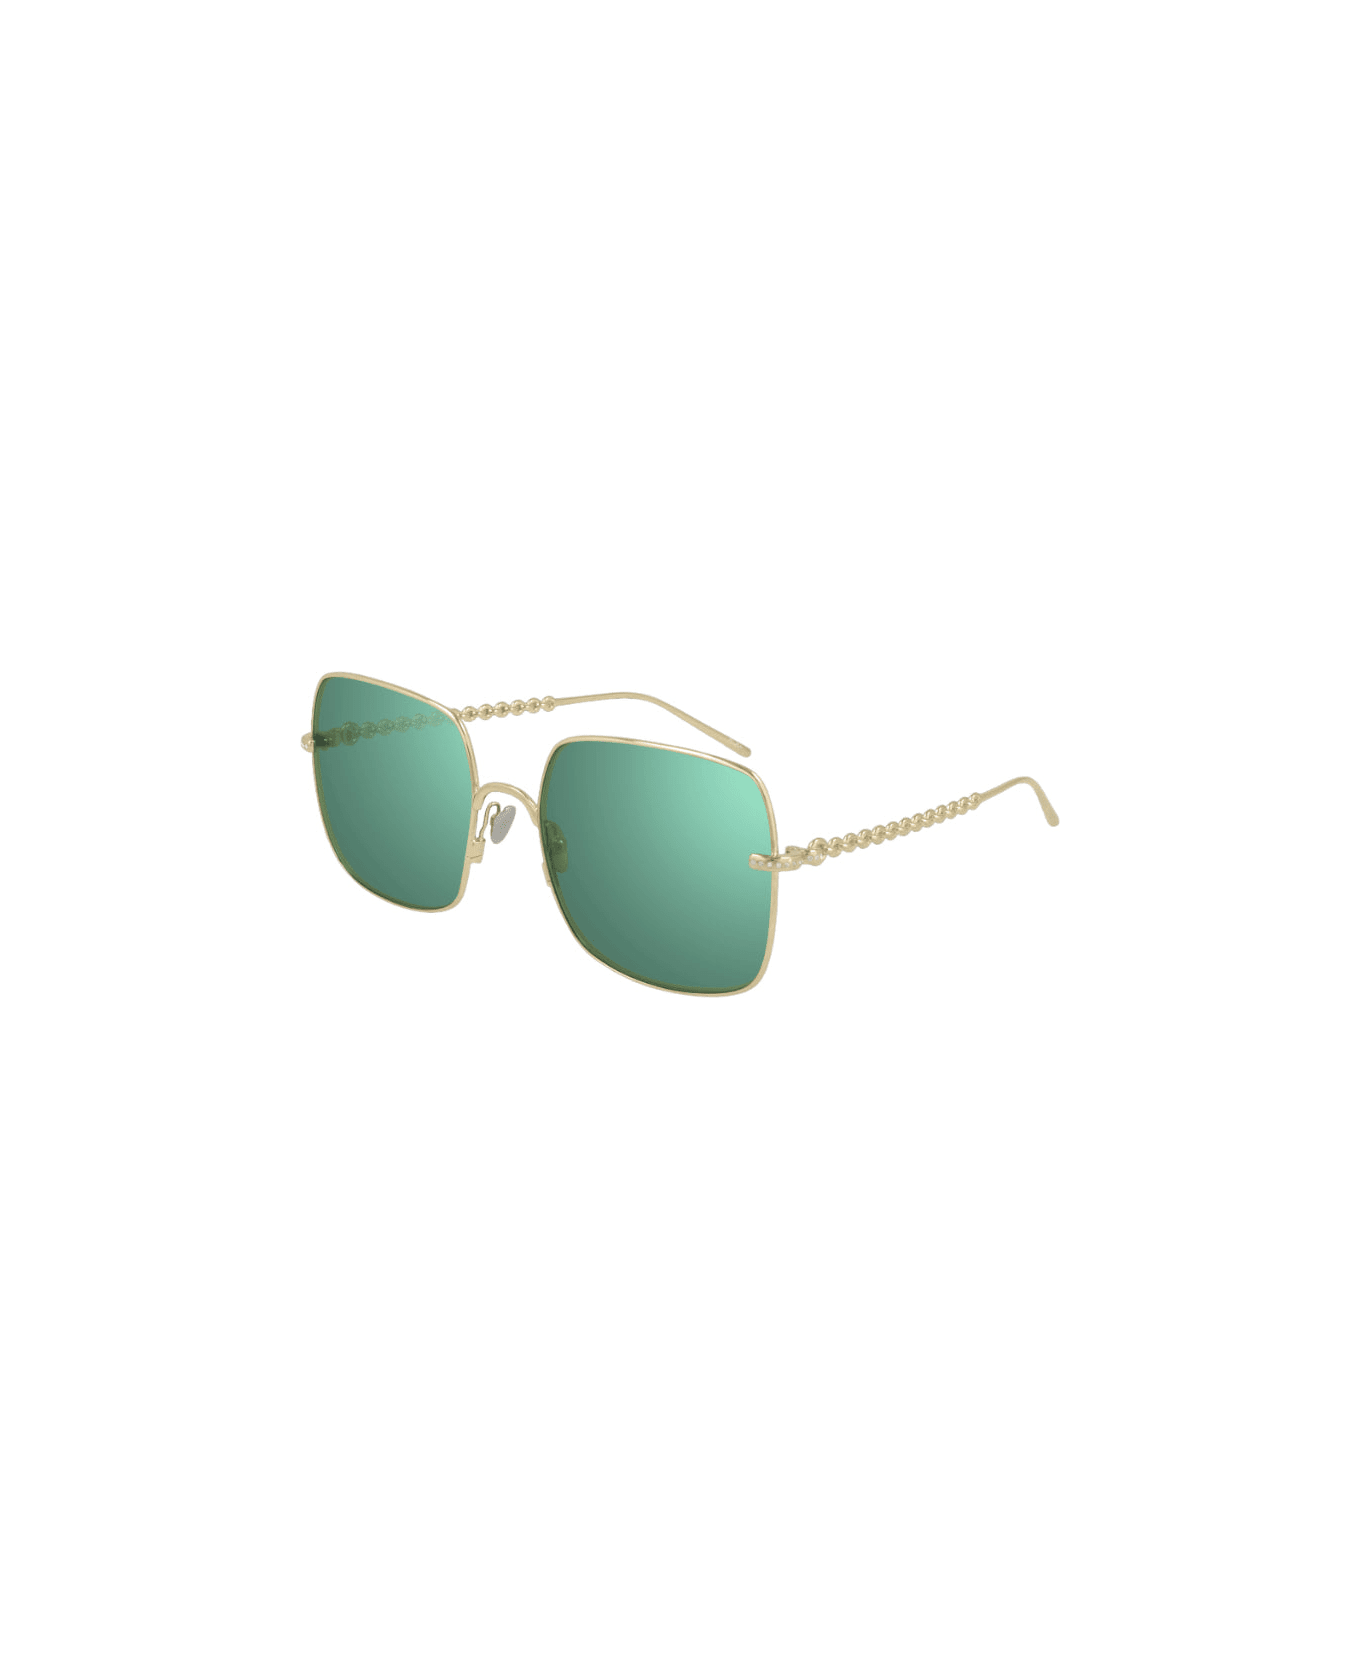 Pomellato Pm 0102 - Gold Sunglasses サングラス